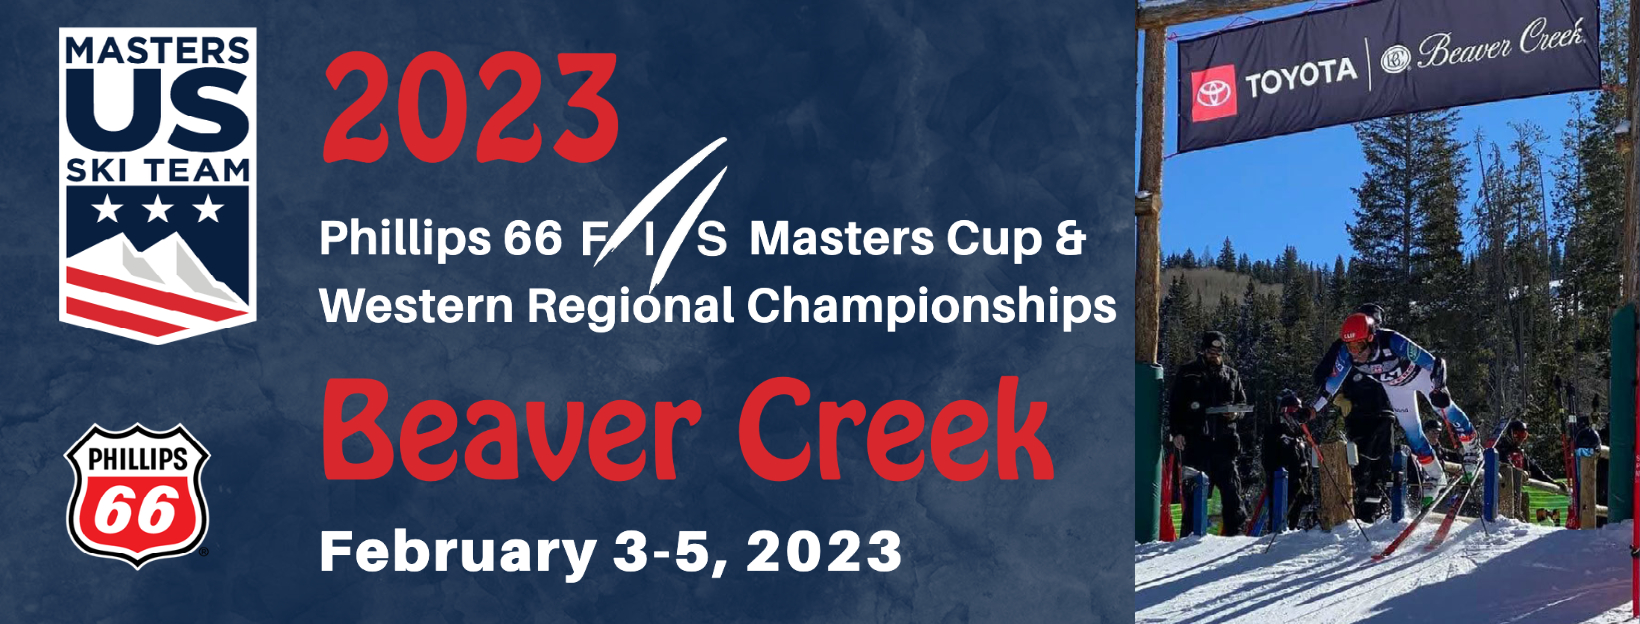 2023 FIS Masters Cup at Beaver Creek